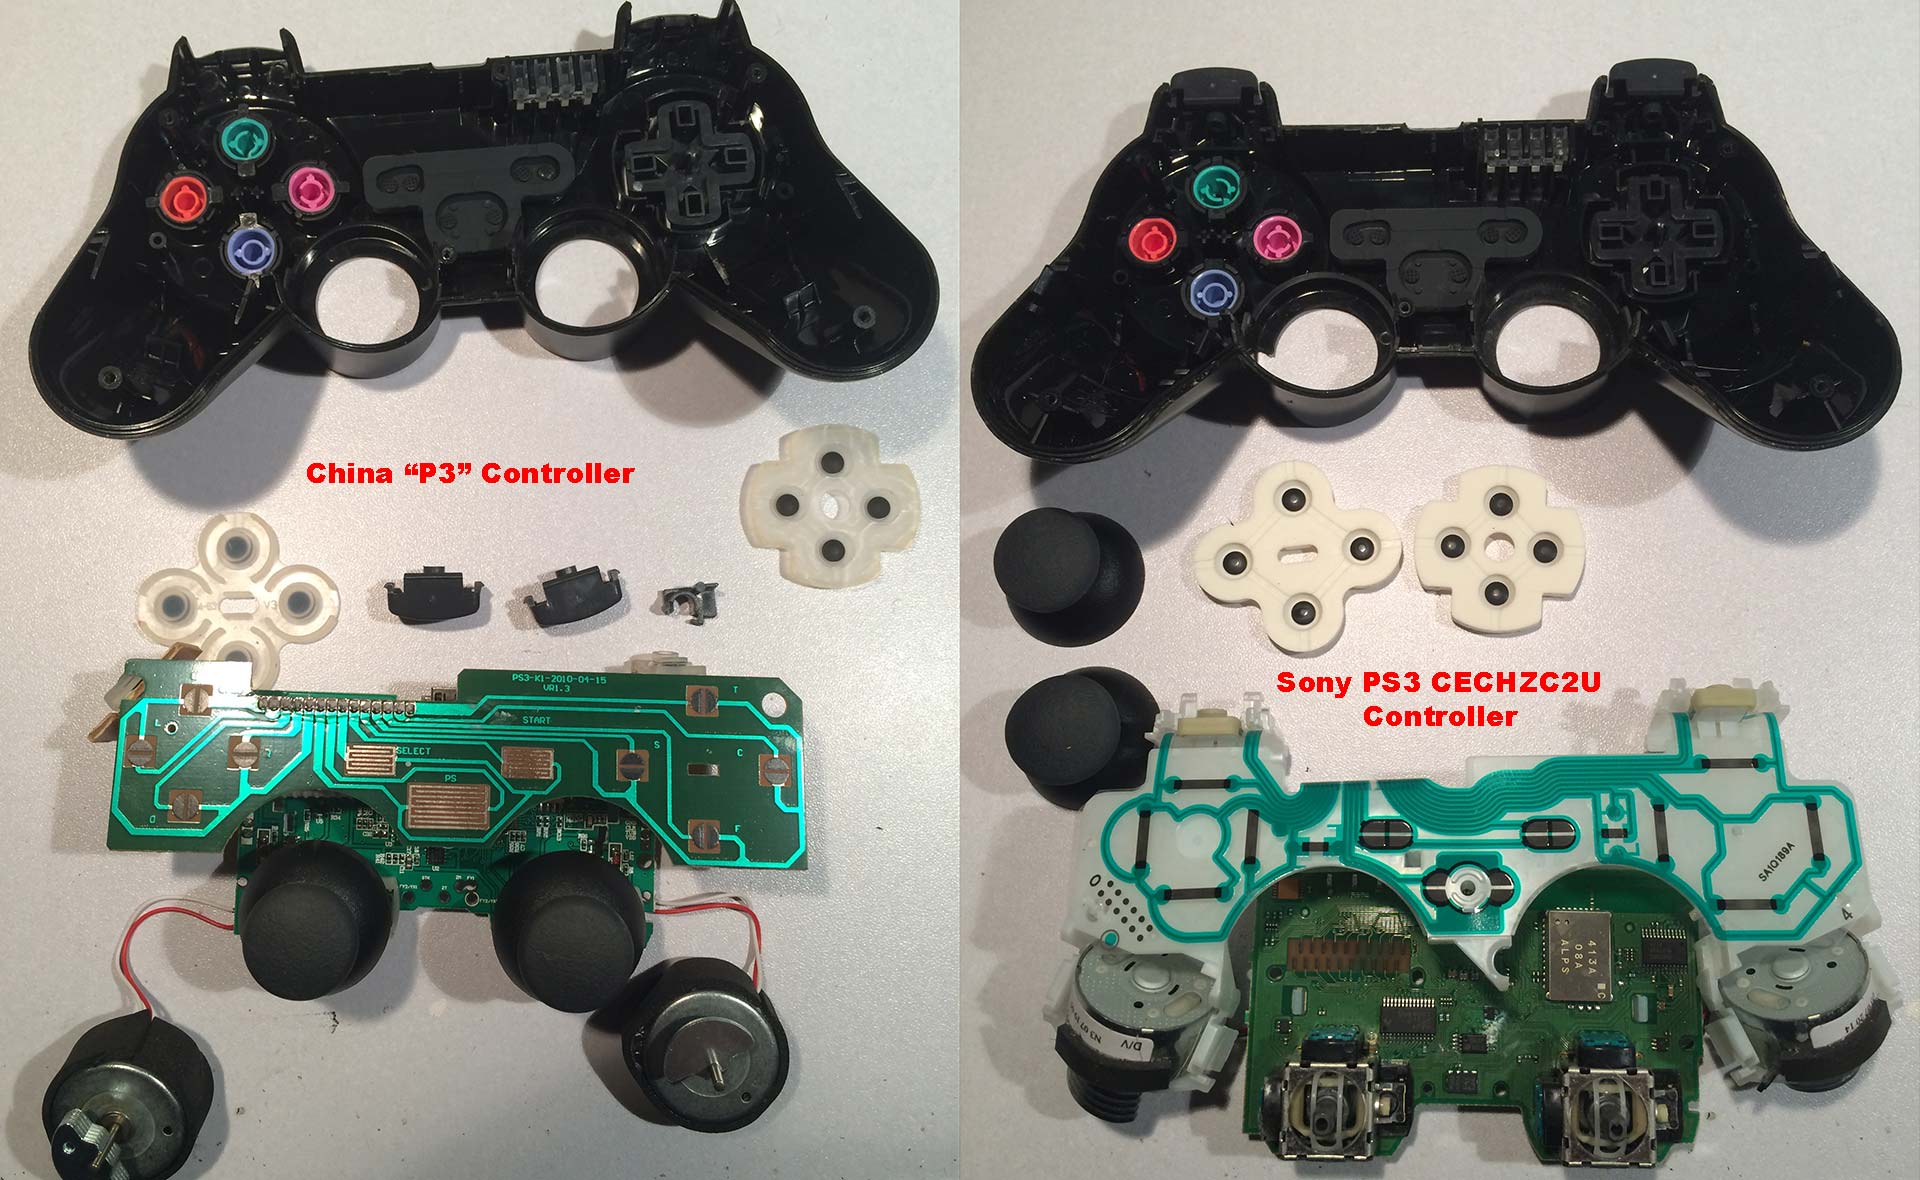 P3 vs PS3 controller.